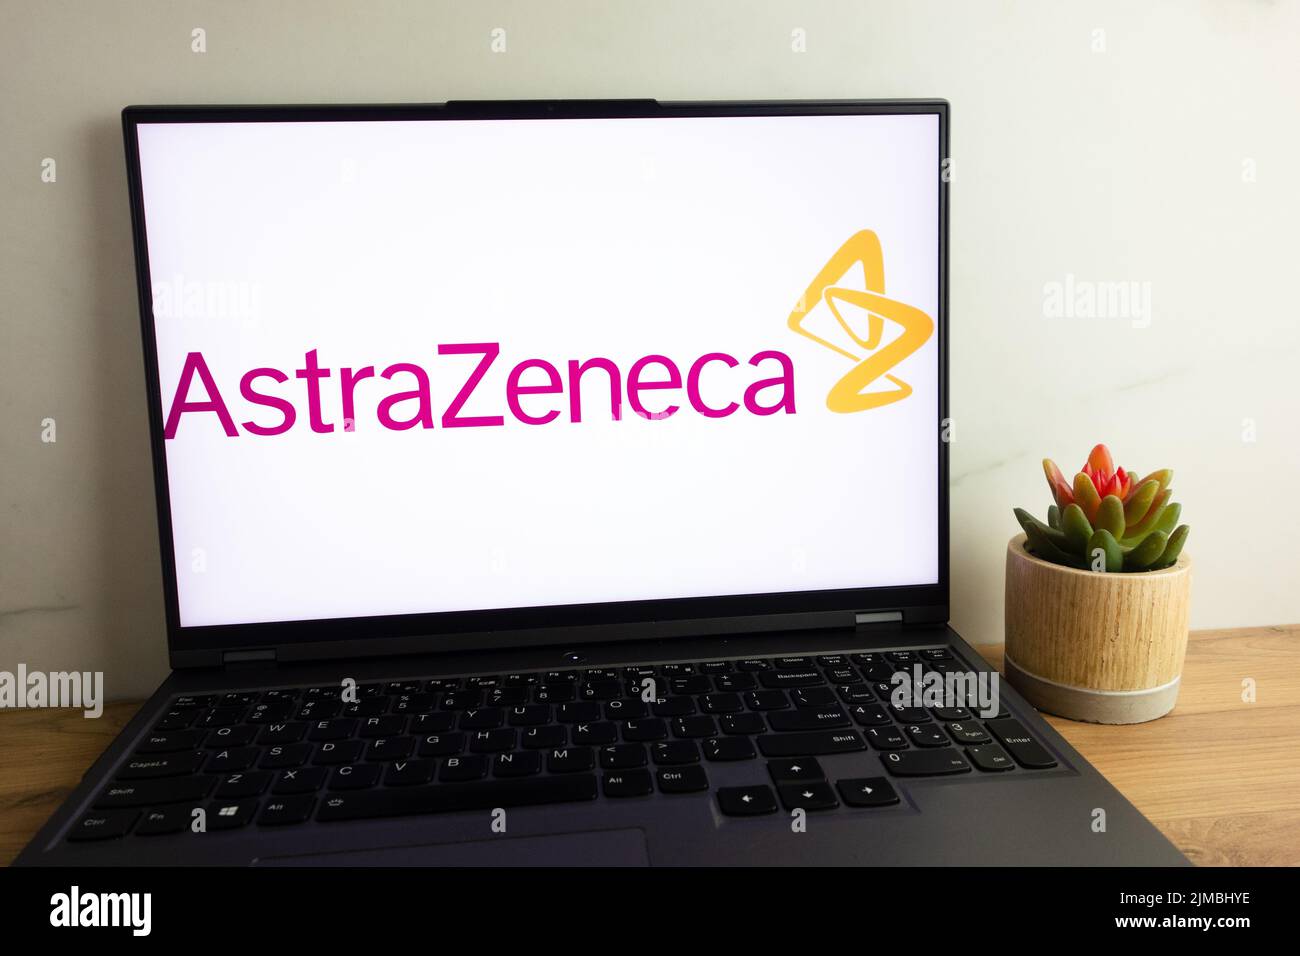 KONSKIE, POLAND - August 04, 2022: AstraZeneca plc British-Swedish multinational pharmaceutical and biotechnology company logo displayed on laptop com Stock Photo